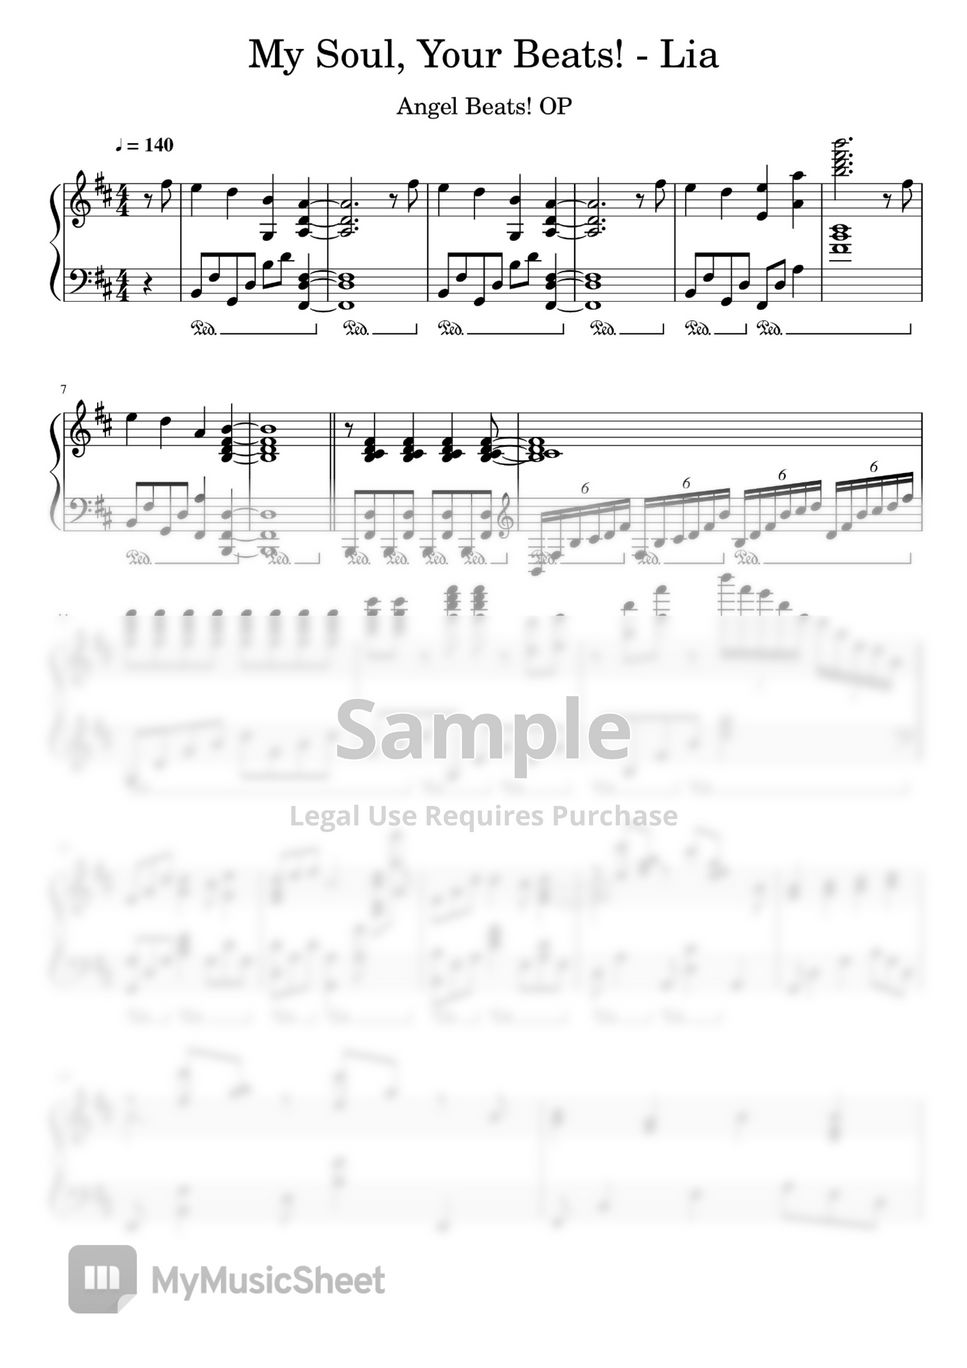 Lia - My Soul, Your Beats! - Lia (Angel Beats! OP) Piano by ฺBWC Piano Tutorial